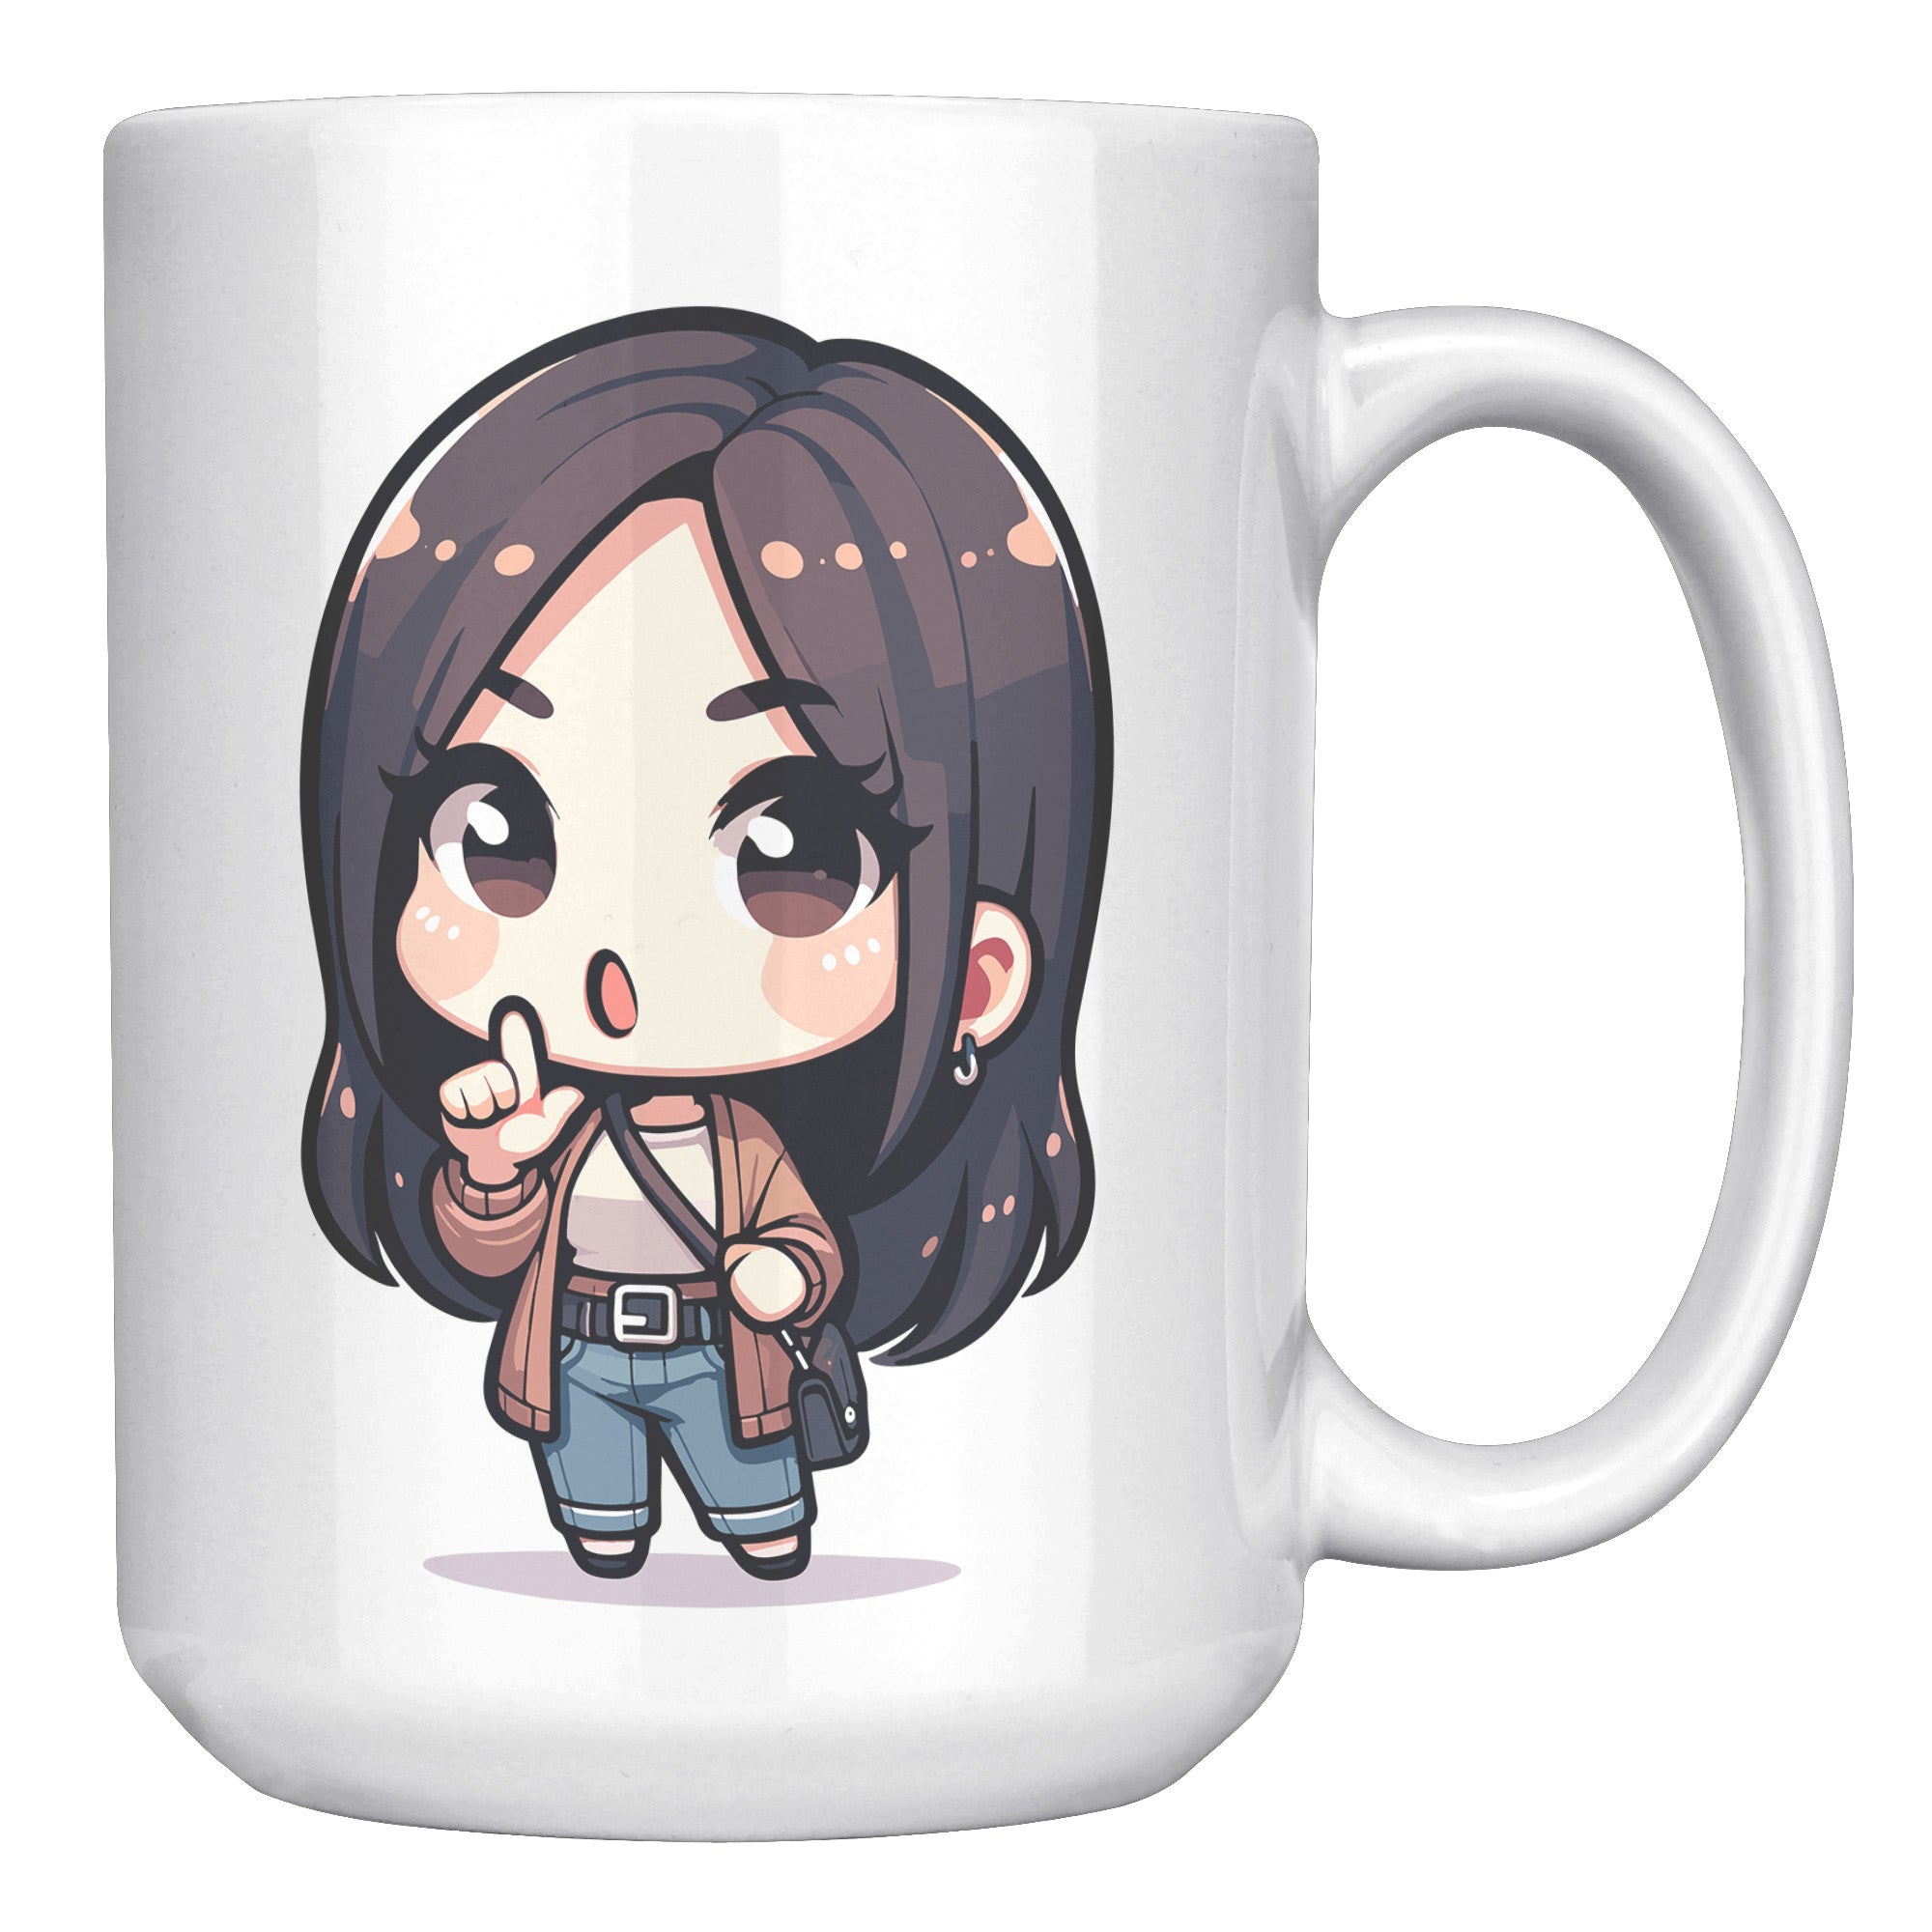 "Marites Gossip Queen Coffee Mug - Cute Cartoon 'Ano Ang Latest?' Cup - Perfect Chismosa Gift - Filipino Slang Tea Mug" - L1